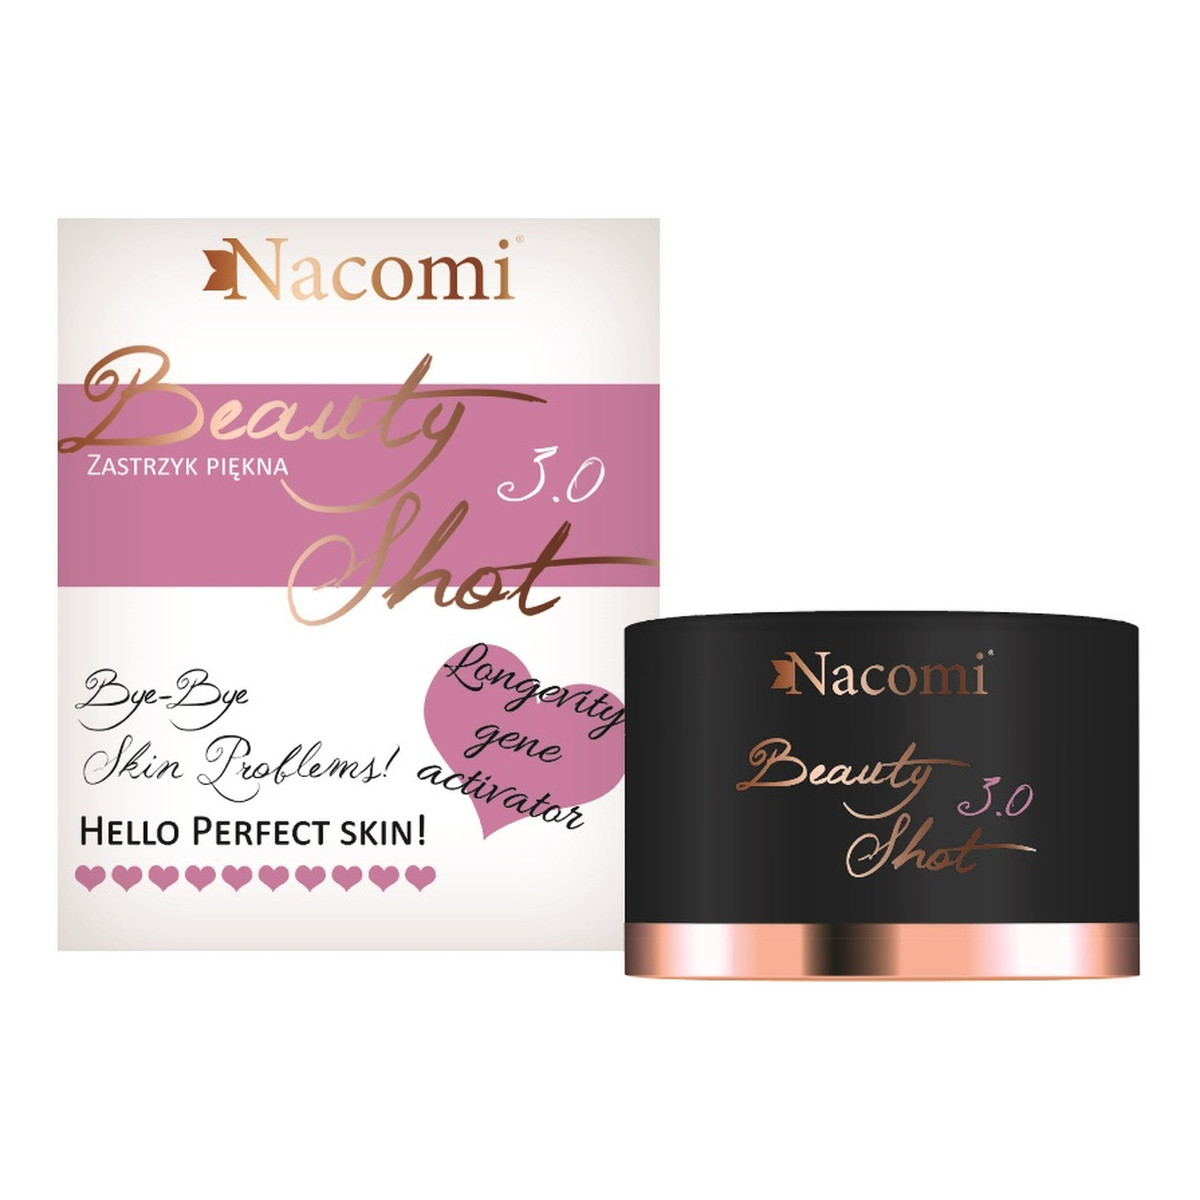 Nacomi Beauty Shot 3.0 serum-krem do twarzy 30ml